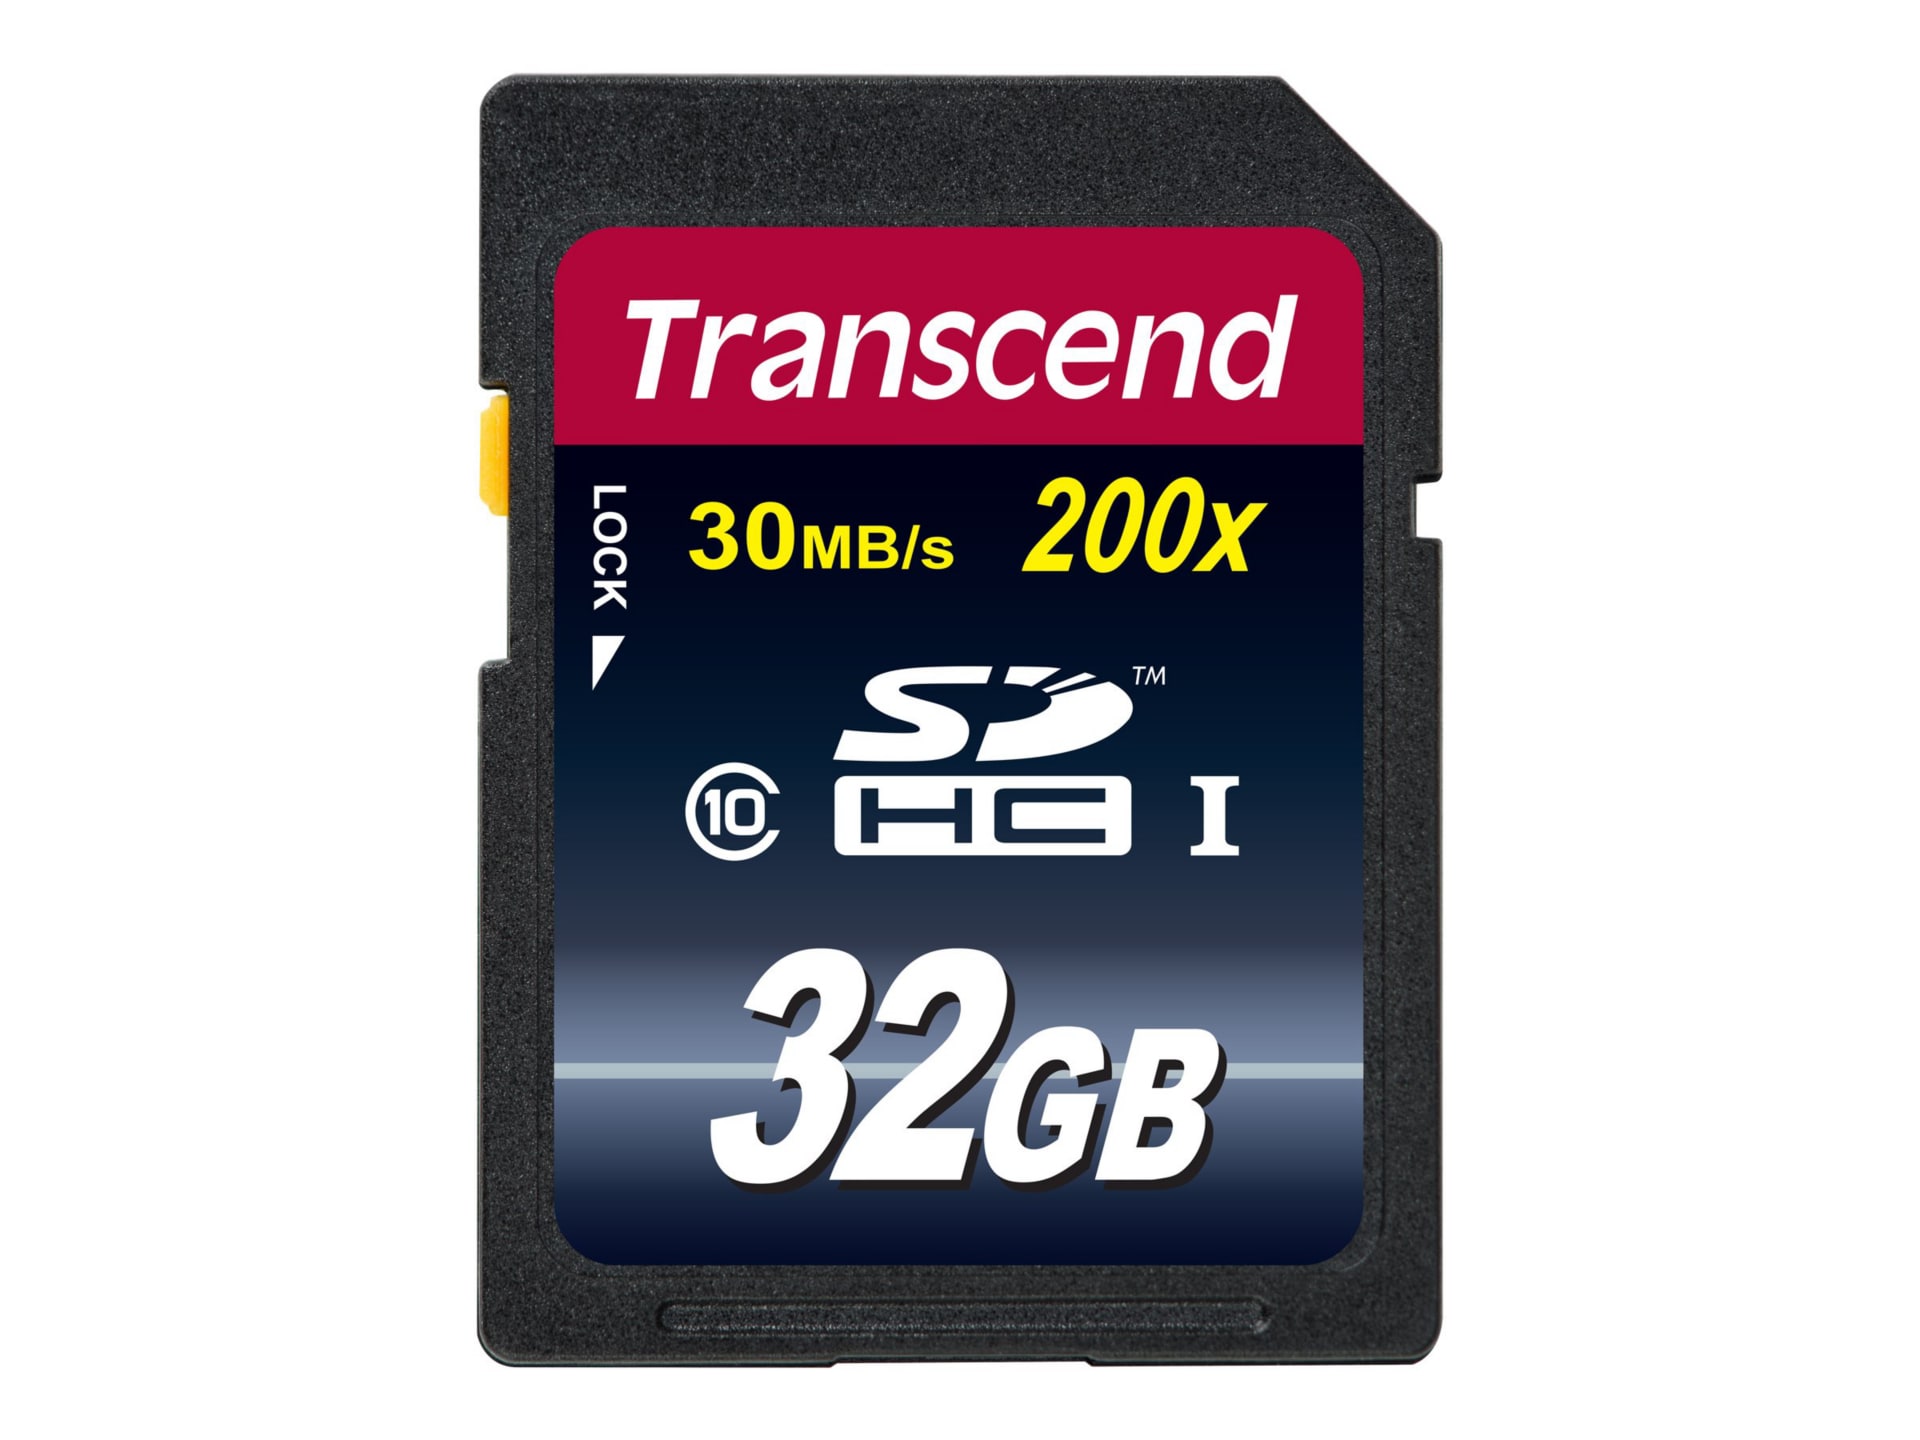 Transcend - flash memory card - 32 GB - SDHC